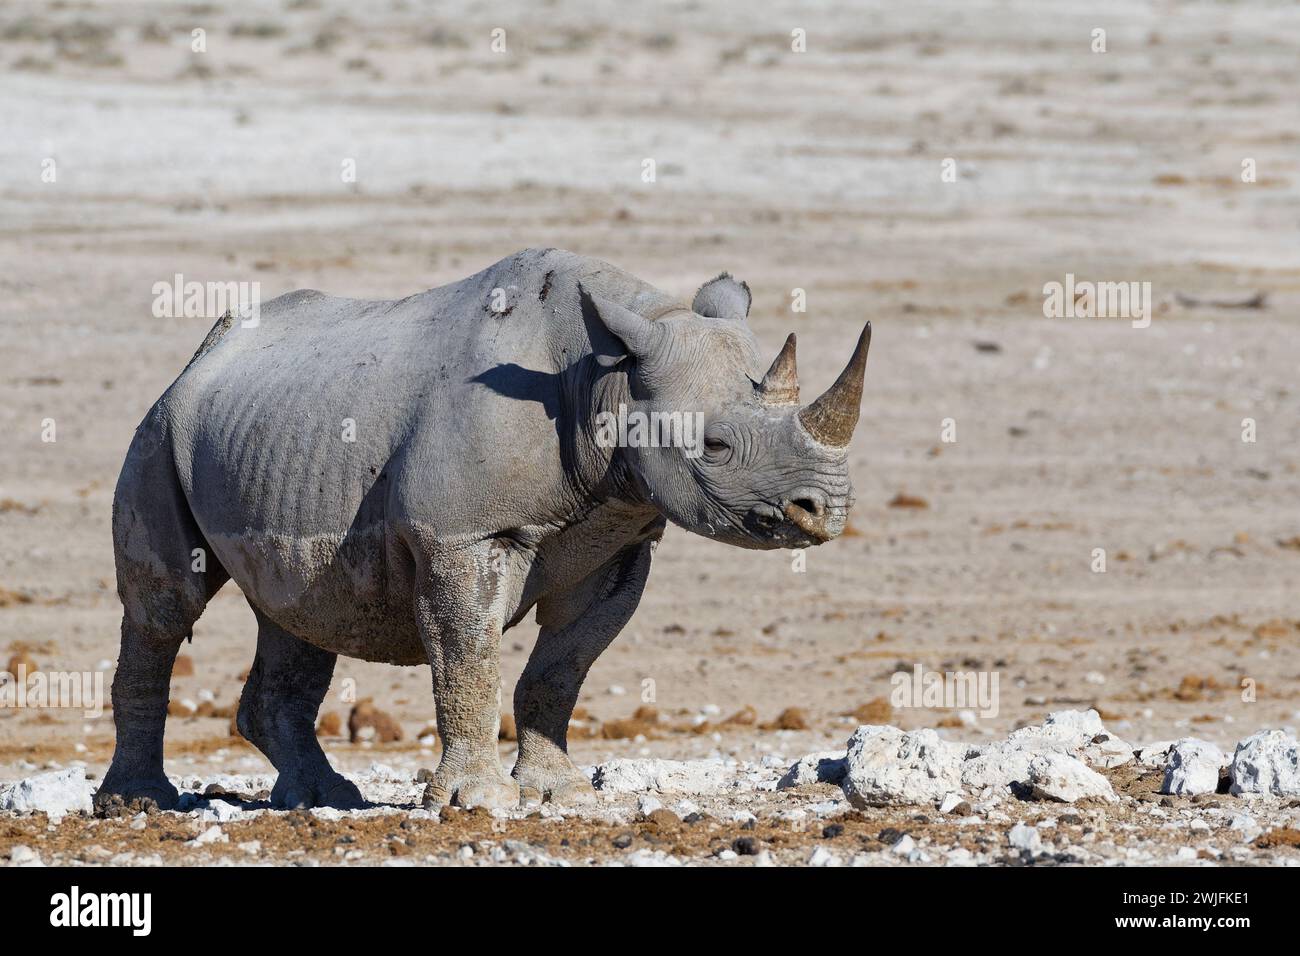 Rinoceronte negro (Diceros bicornis), hembra adulta cubierta de barro húmedo, de pie cerca del pozo de agua, alerta, Parque Nacional Etosha, Namibia, África Foto de stock